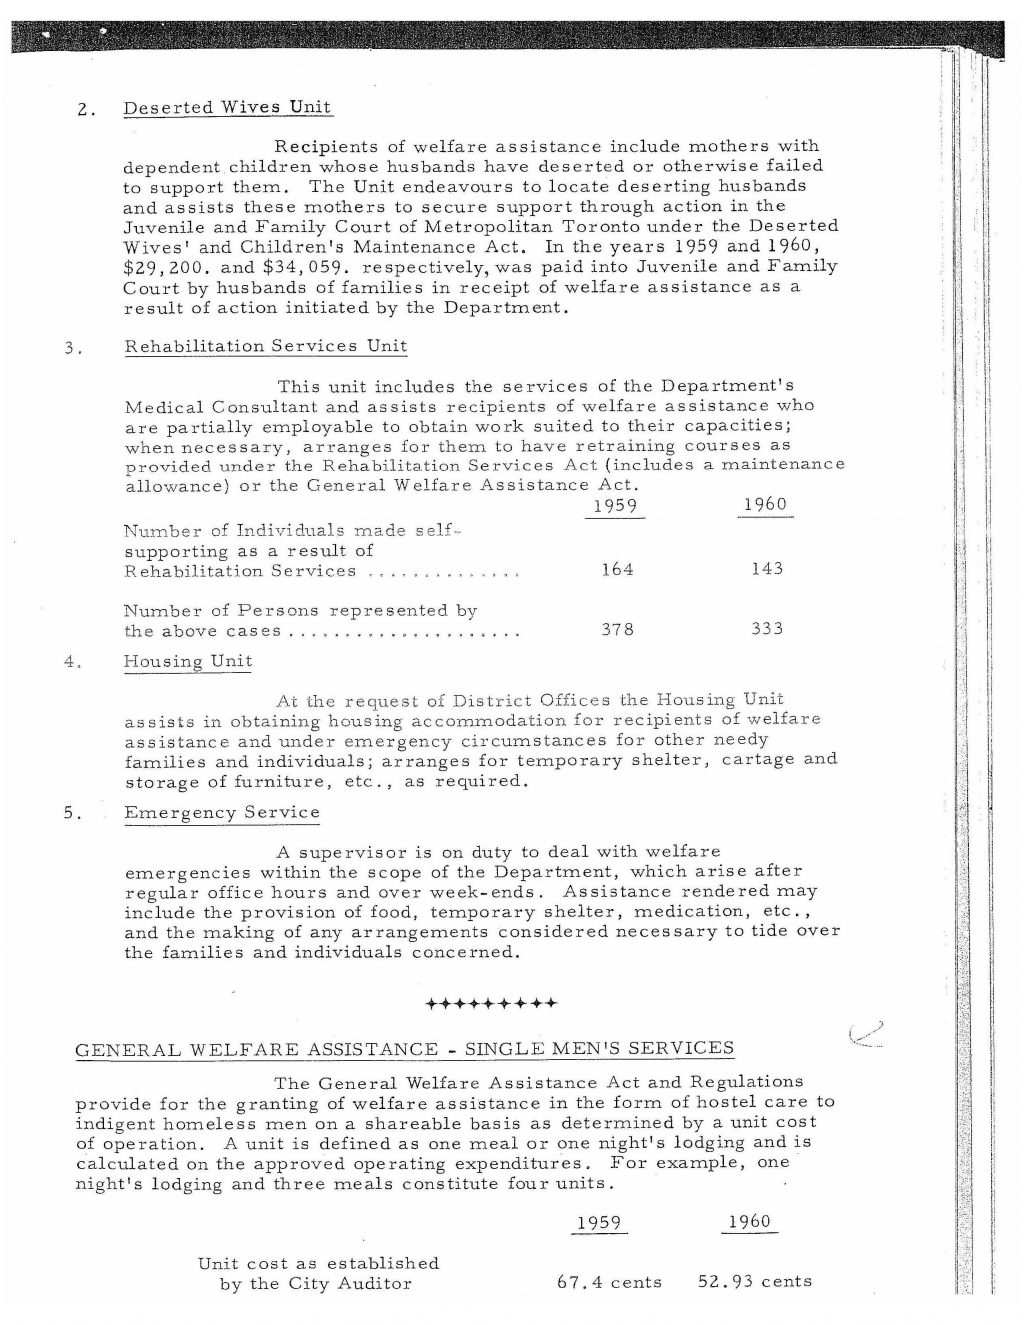 City of Toronto Department of Public Welfare, Biennial Report, 1959-1960.